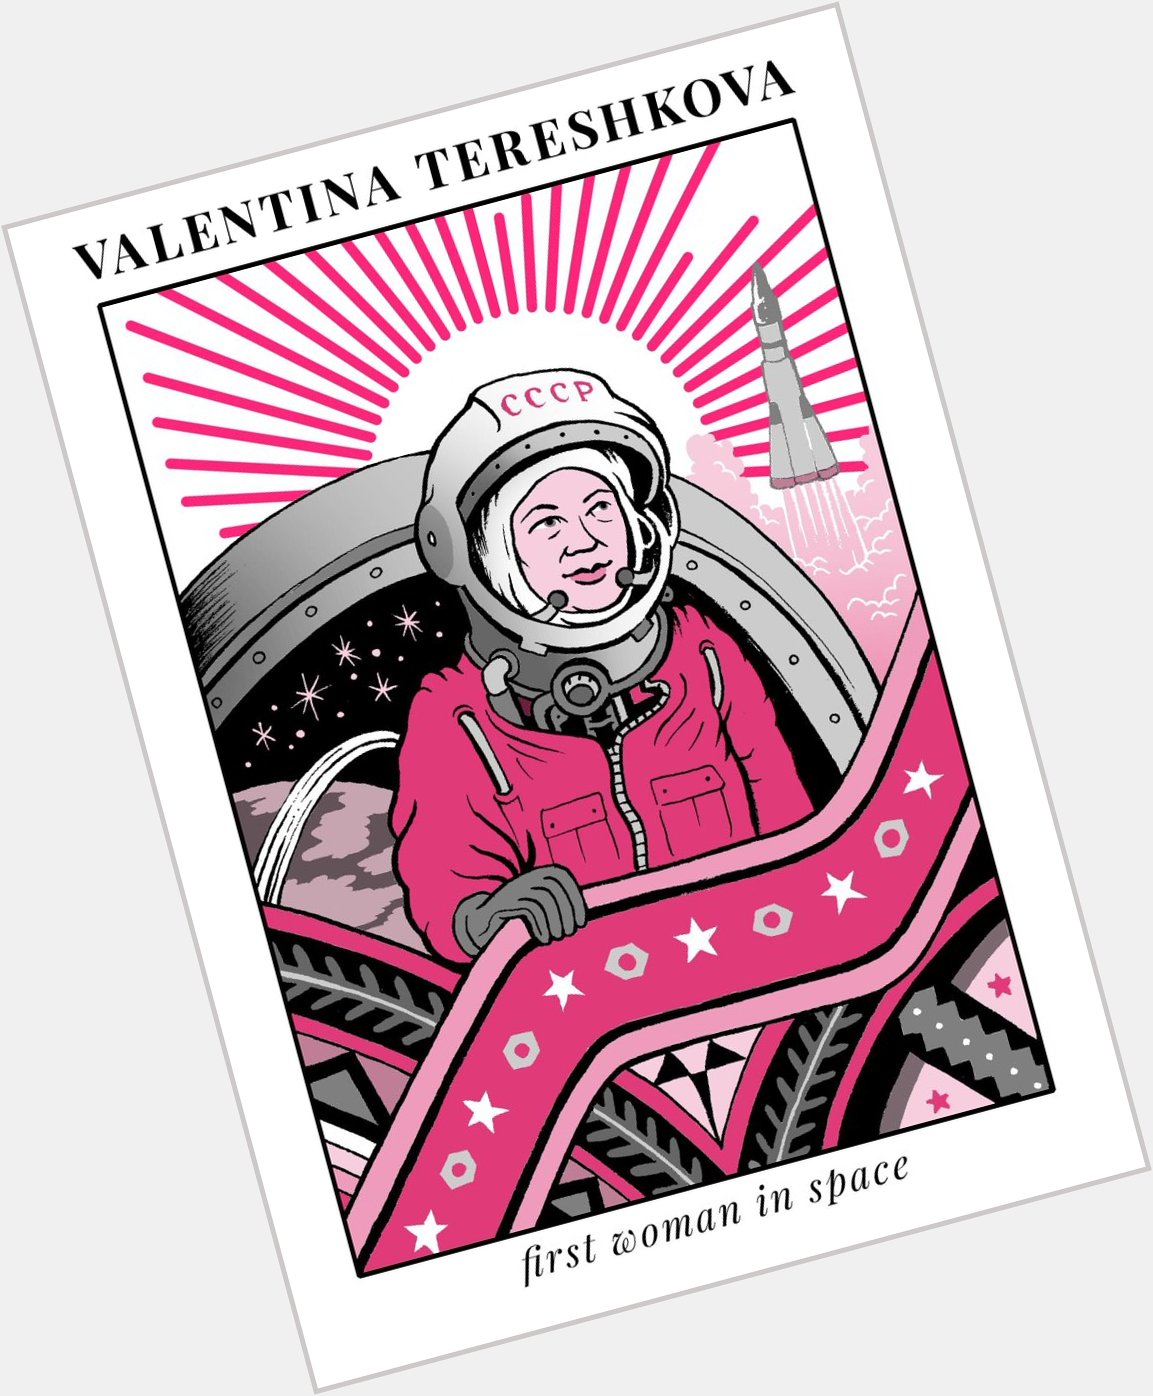 Happy birthday to Valentina Tereshkova, the first woman in space!  